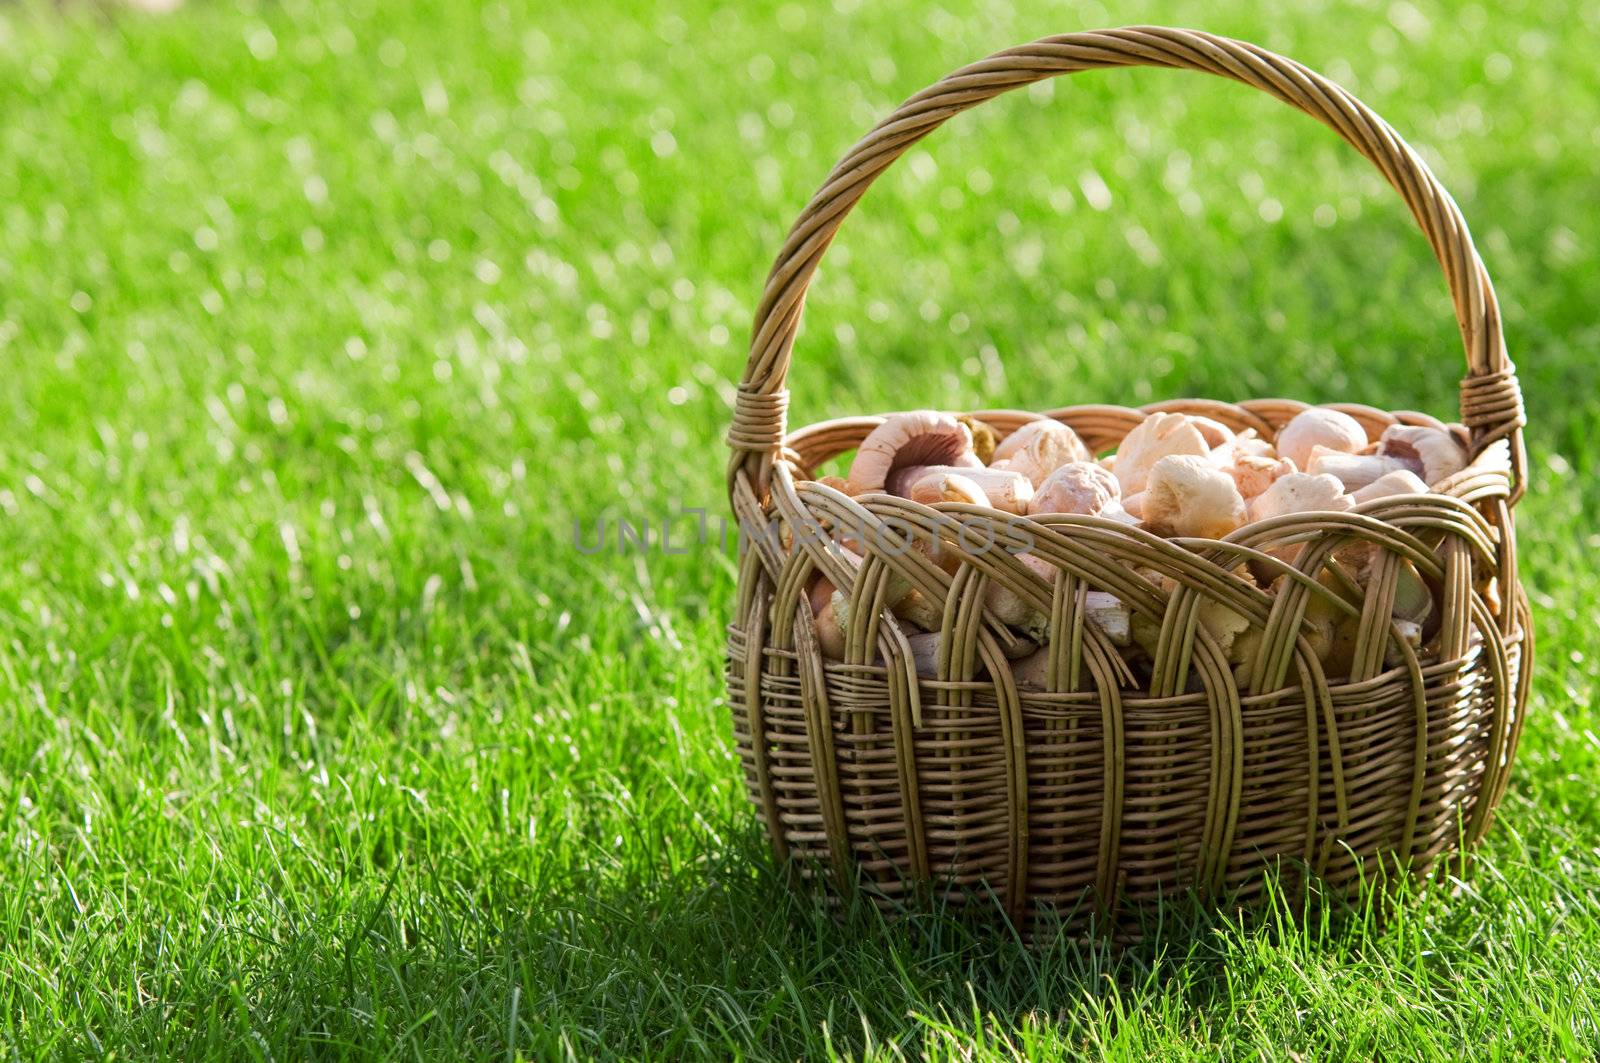 Basket of fresh mushrooms on grass